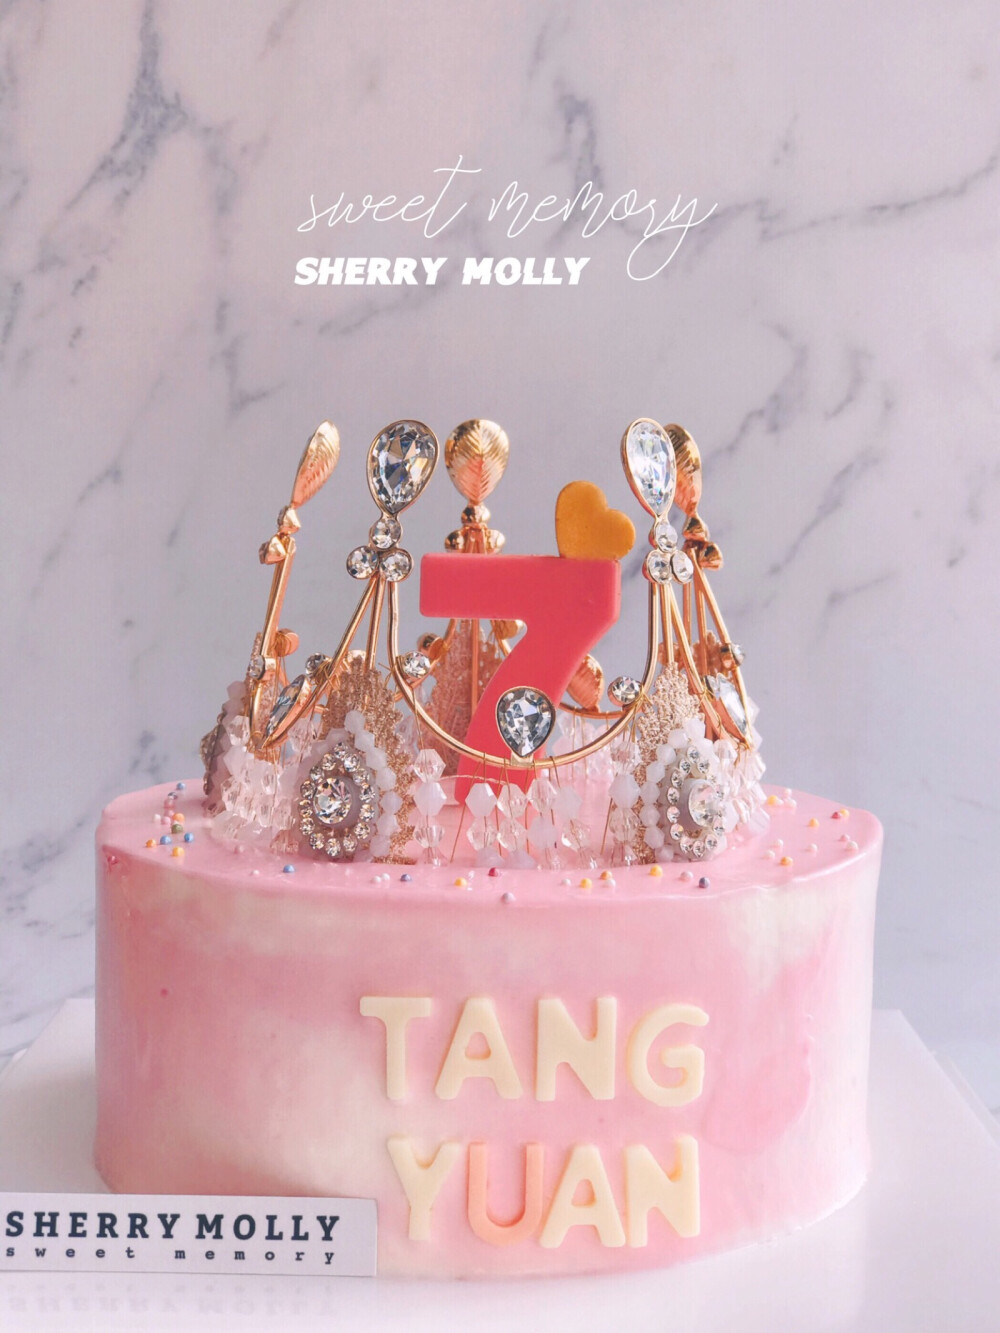 #SHERRY Molly家の下午茶#—『原味cake』老客人给女儿订的7周岁生日cake～上一次这款cake就是客人的闺蜜订的呢最好的友情喔 就是连生日cake都是同一款哒～小公主 生日快乐呀